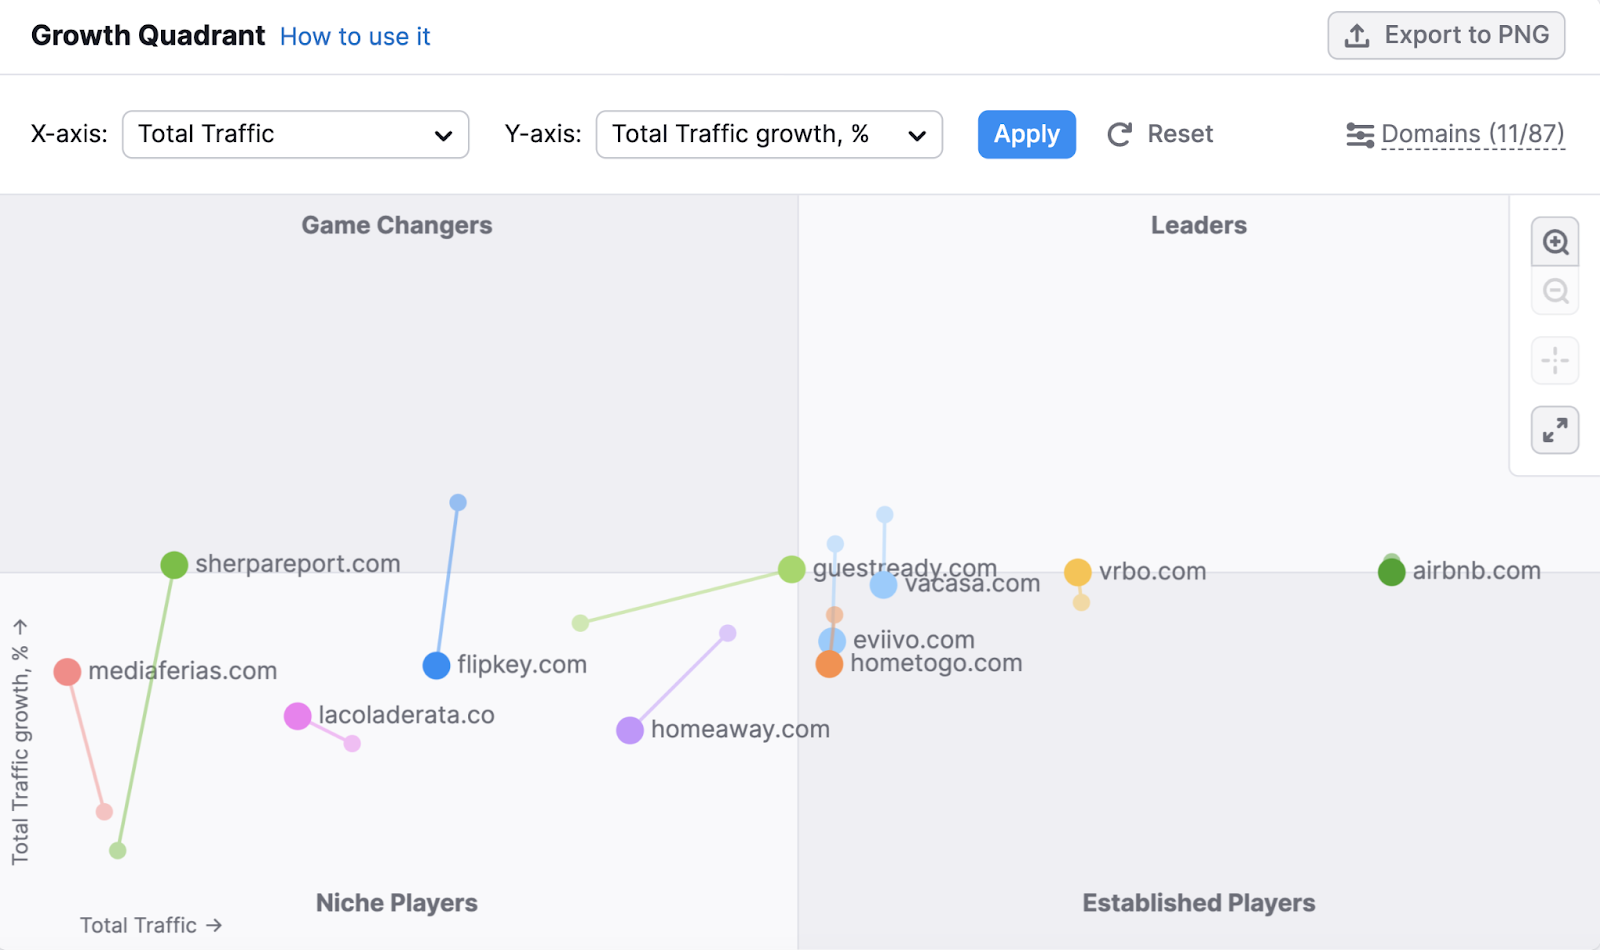 "Growth Quadrant" widget in Market Explorer tool